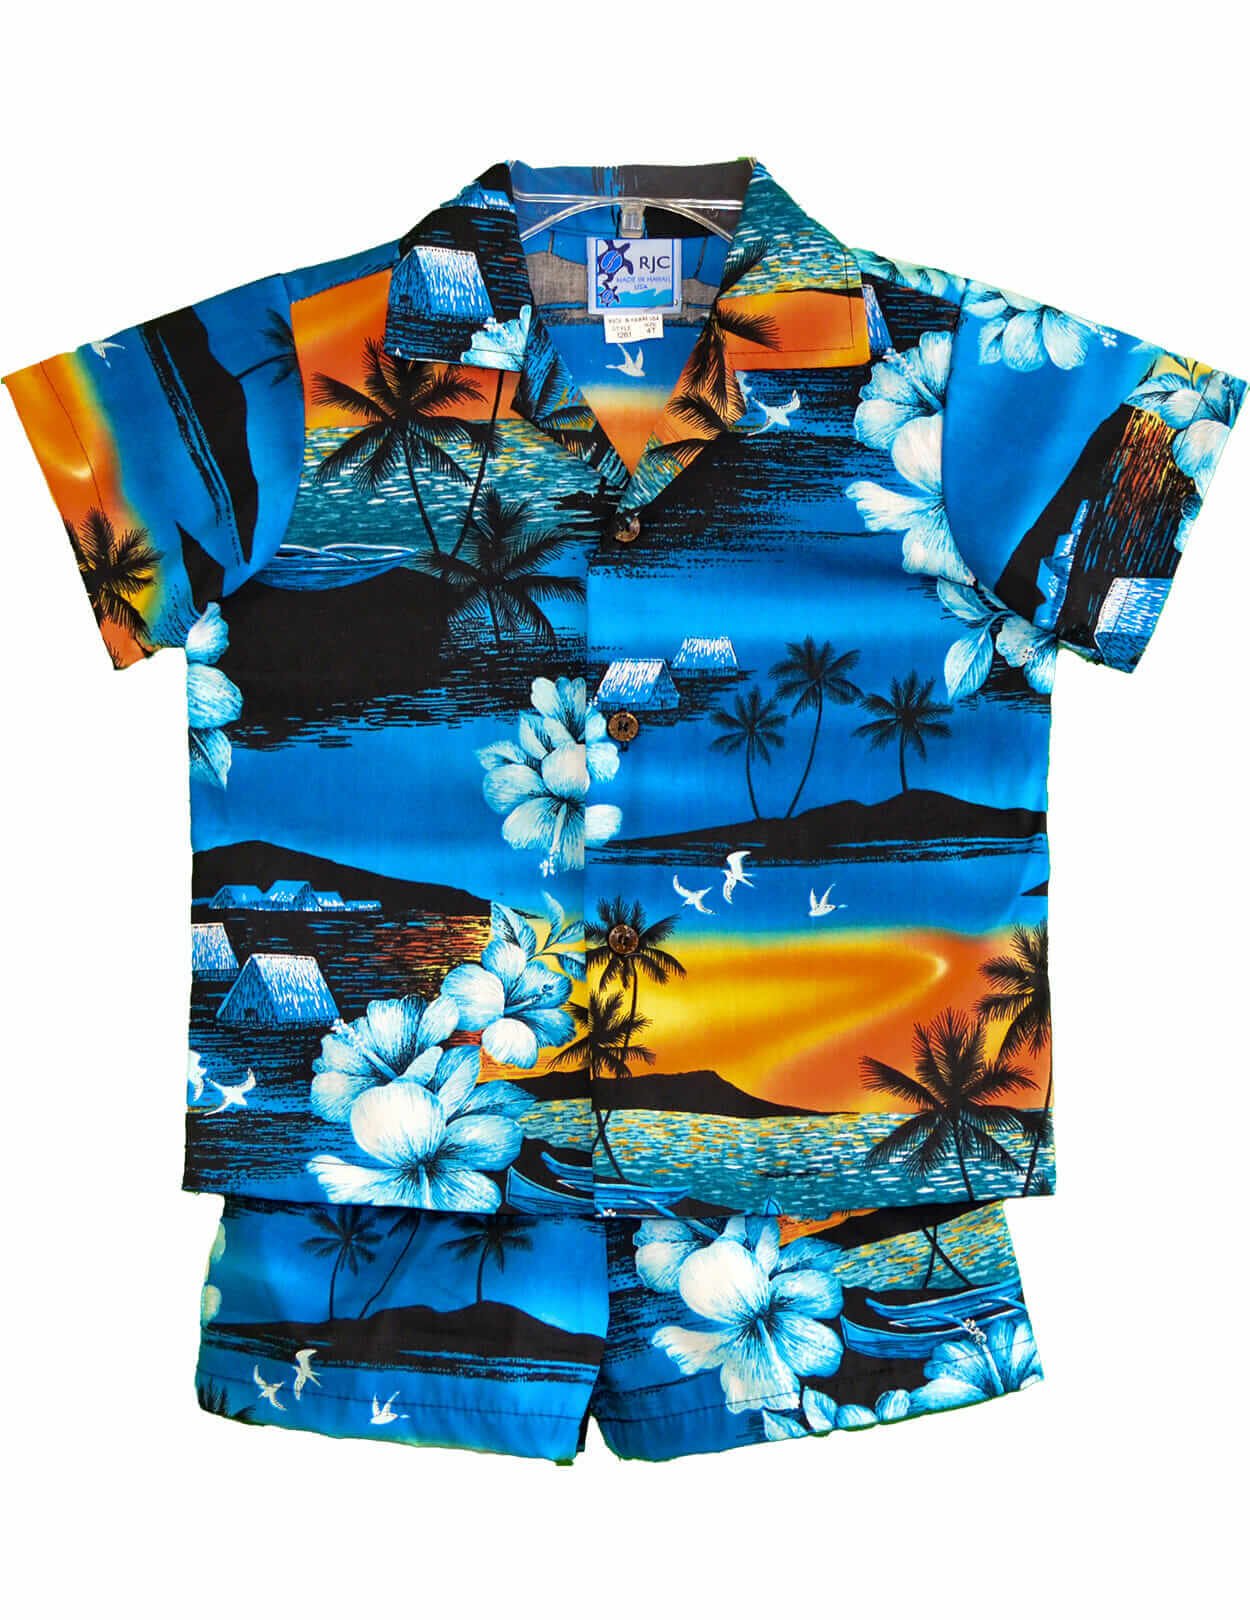 Shirt and Short Toddler Boy's Cabana Set Turquoise